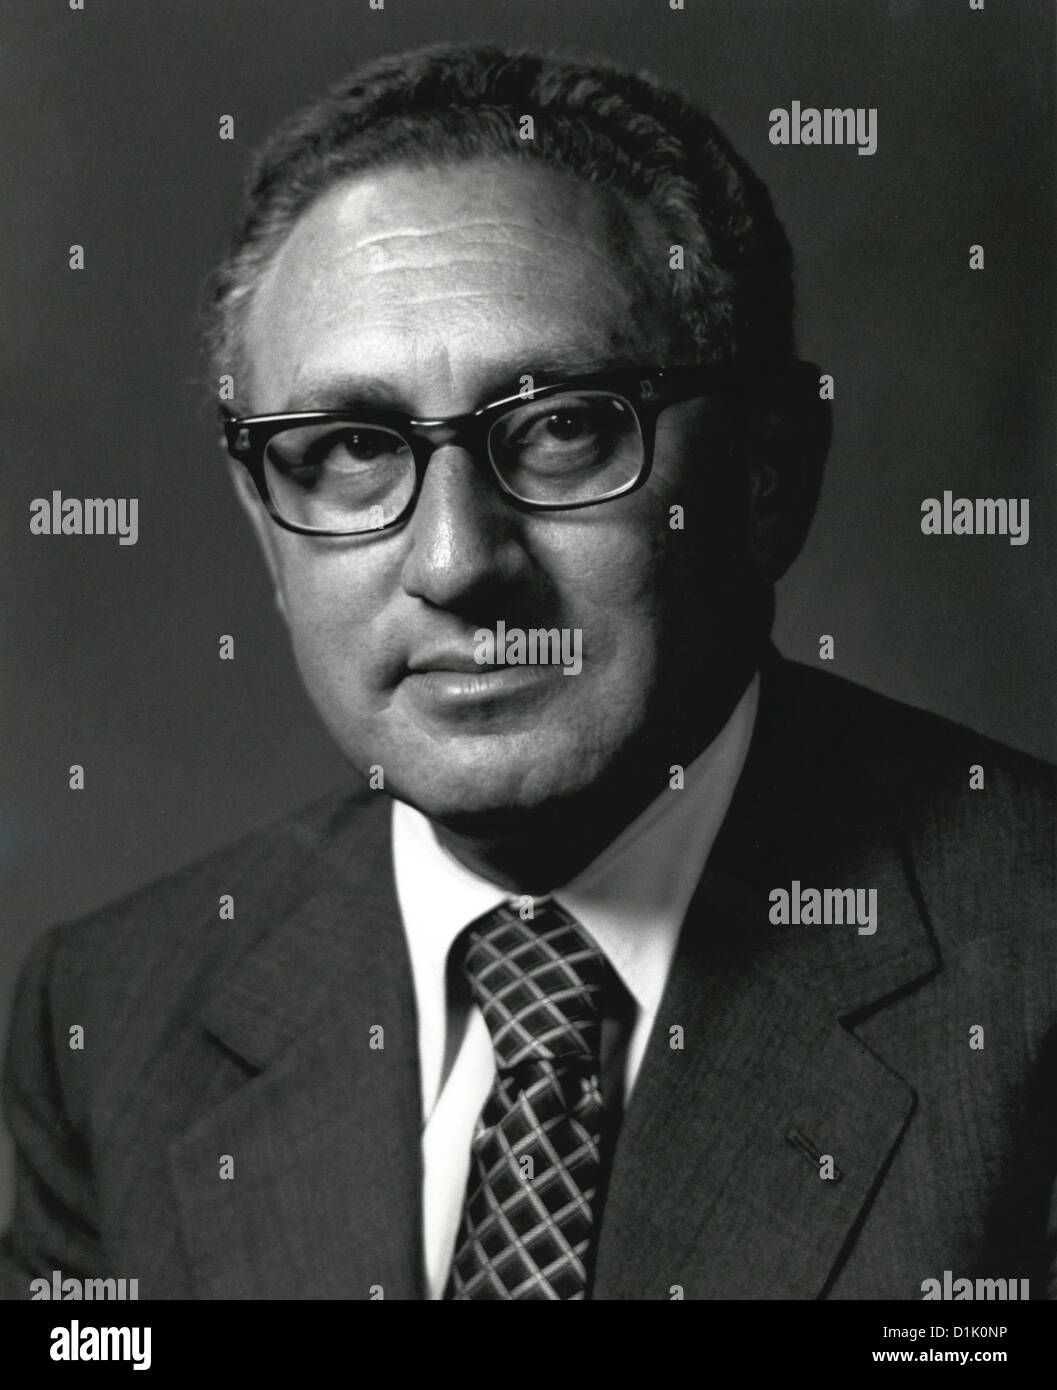 US-Außenminister Henry Kissinger in seinem offiziellen Porträt 22. September 1973 in Washington, DC. Stockfoto